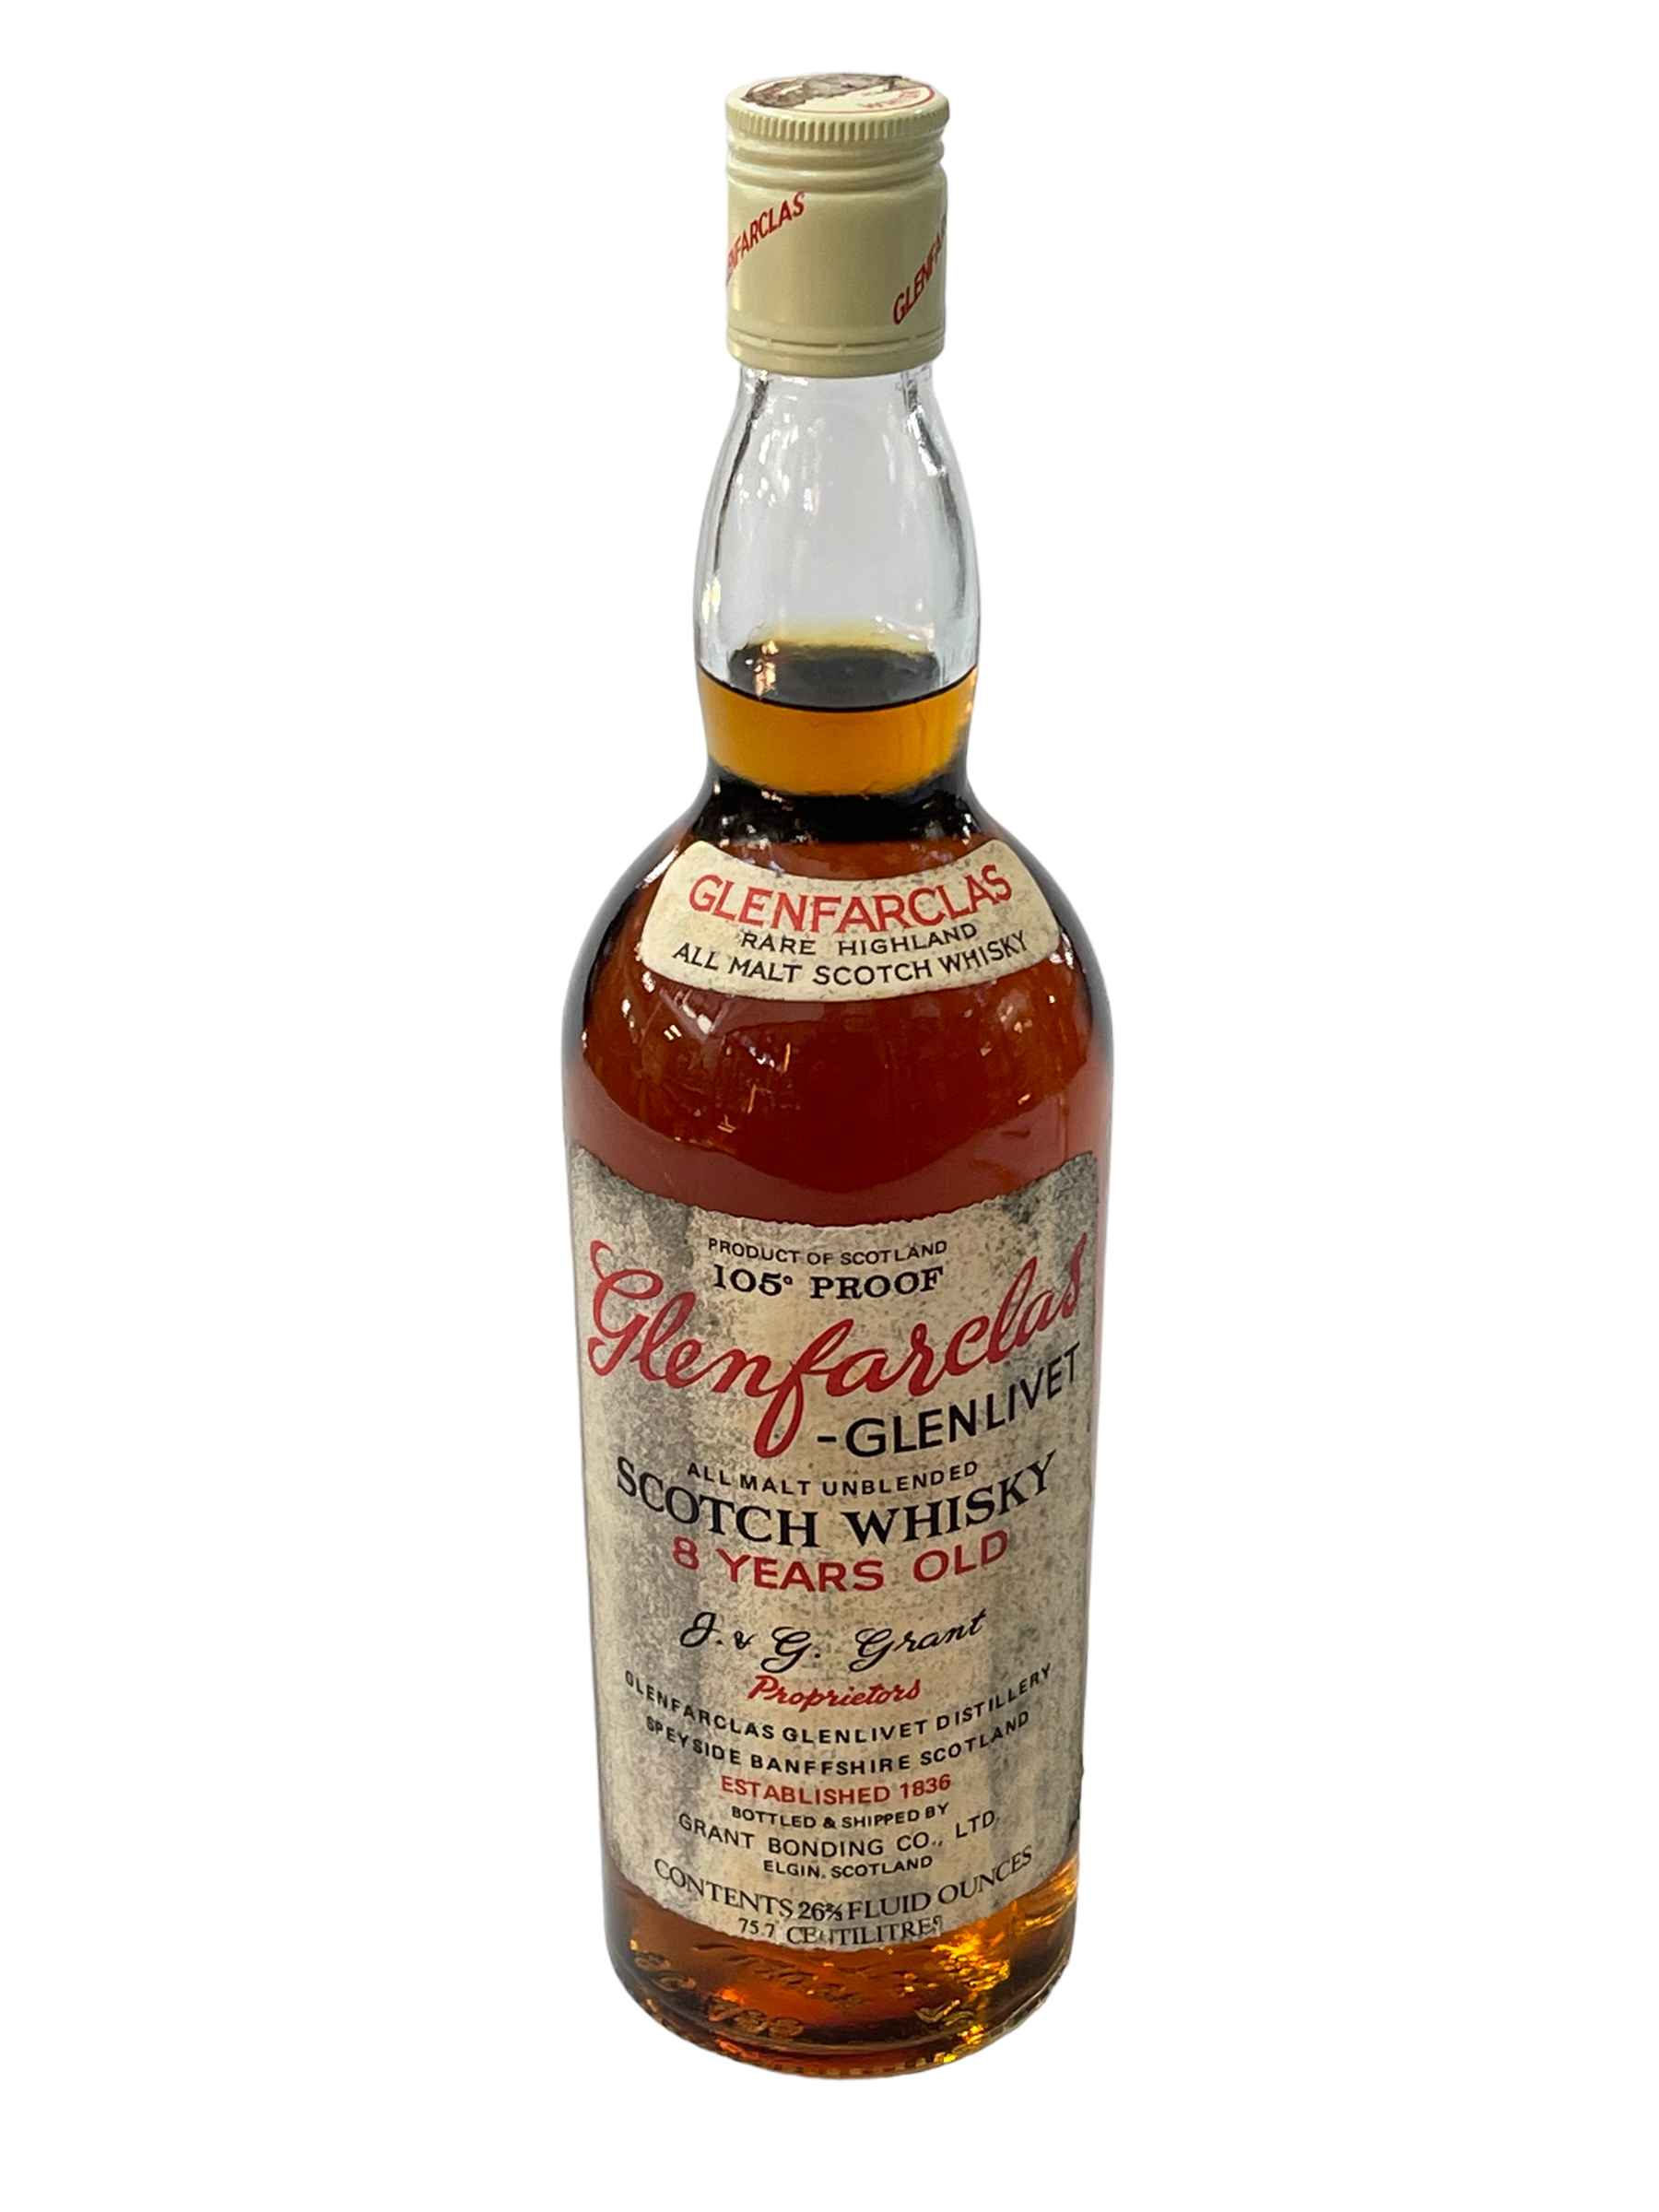 One bottle of whisky; Glanfarclas by Glenlivet 8 years.